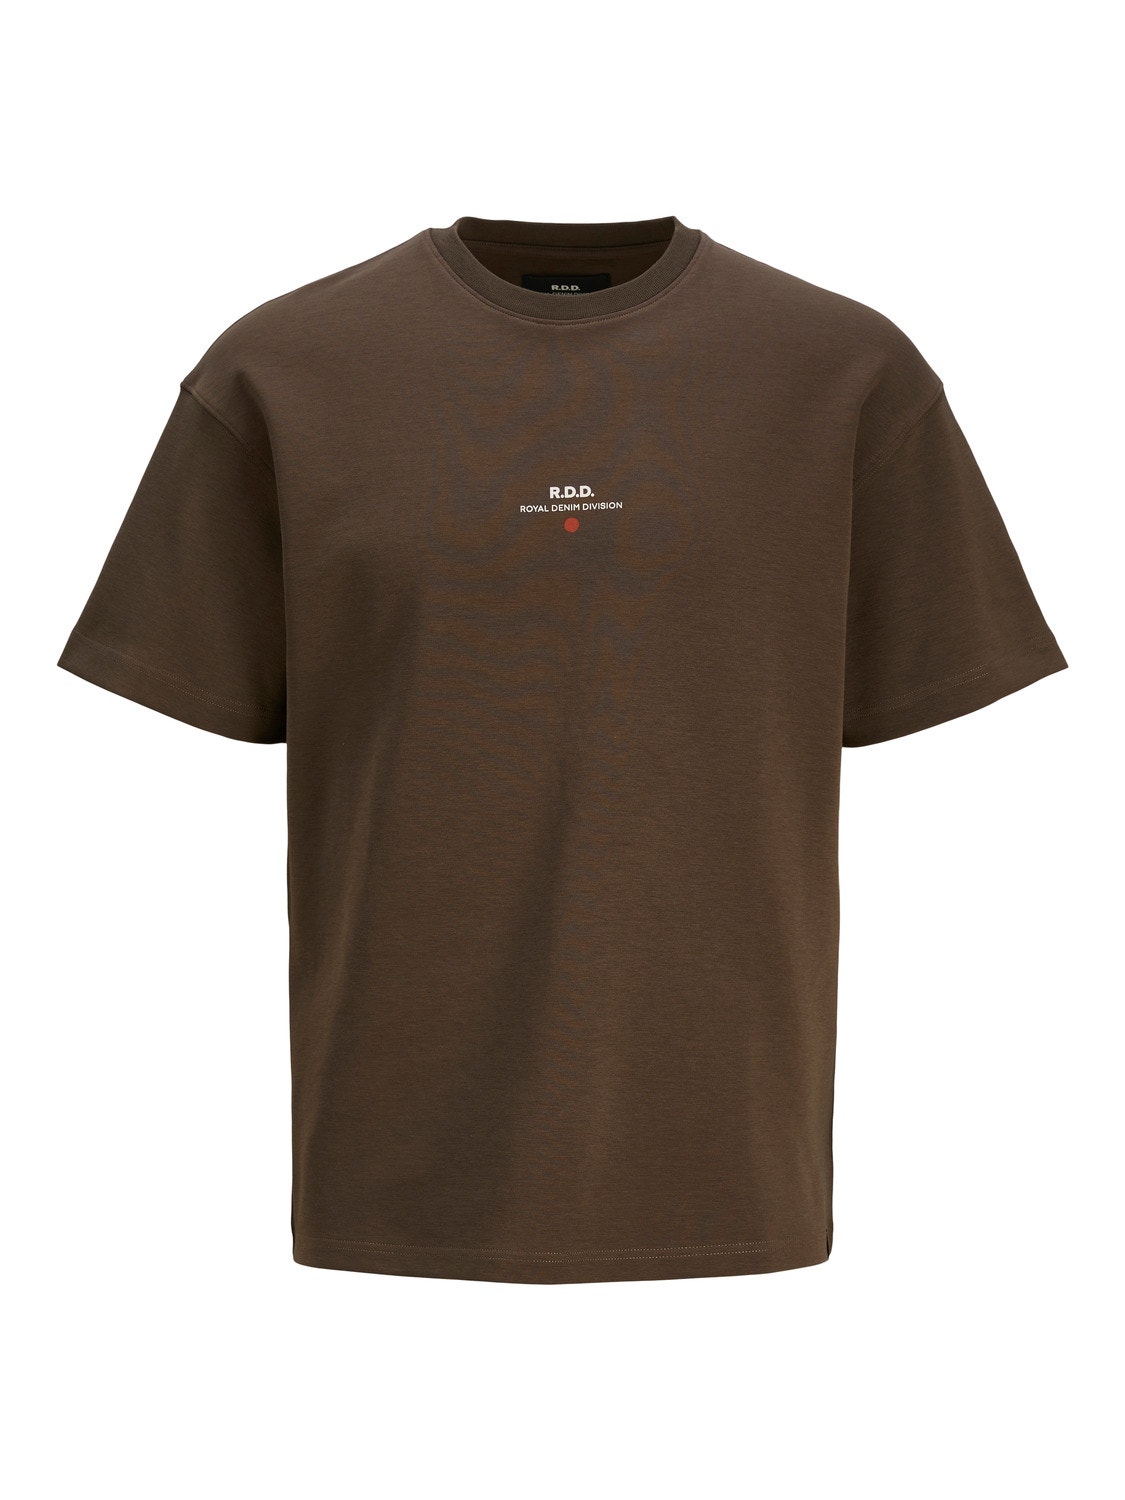 Jack & Jones RDD Καλοκαιρινό μπλουζάκι -Chocolate Brown - 12243500